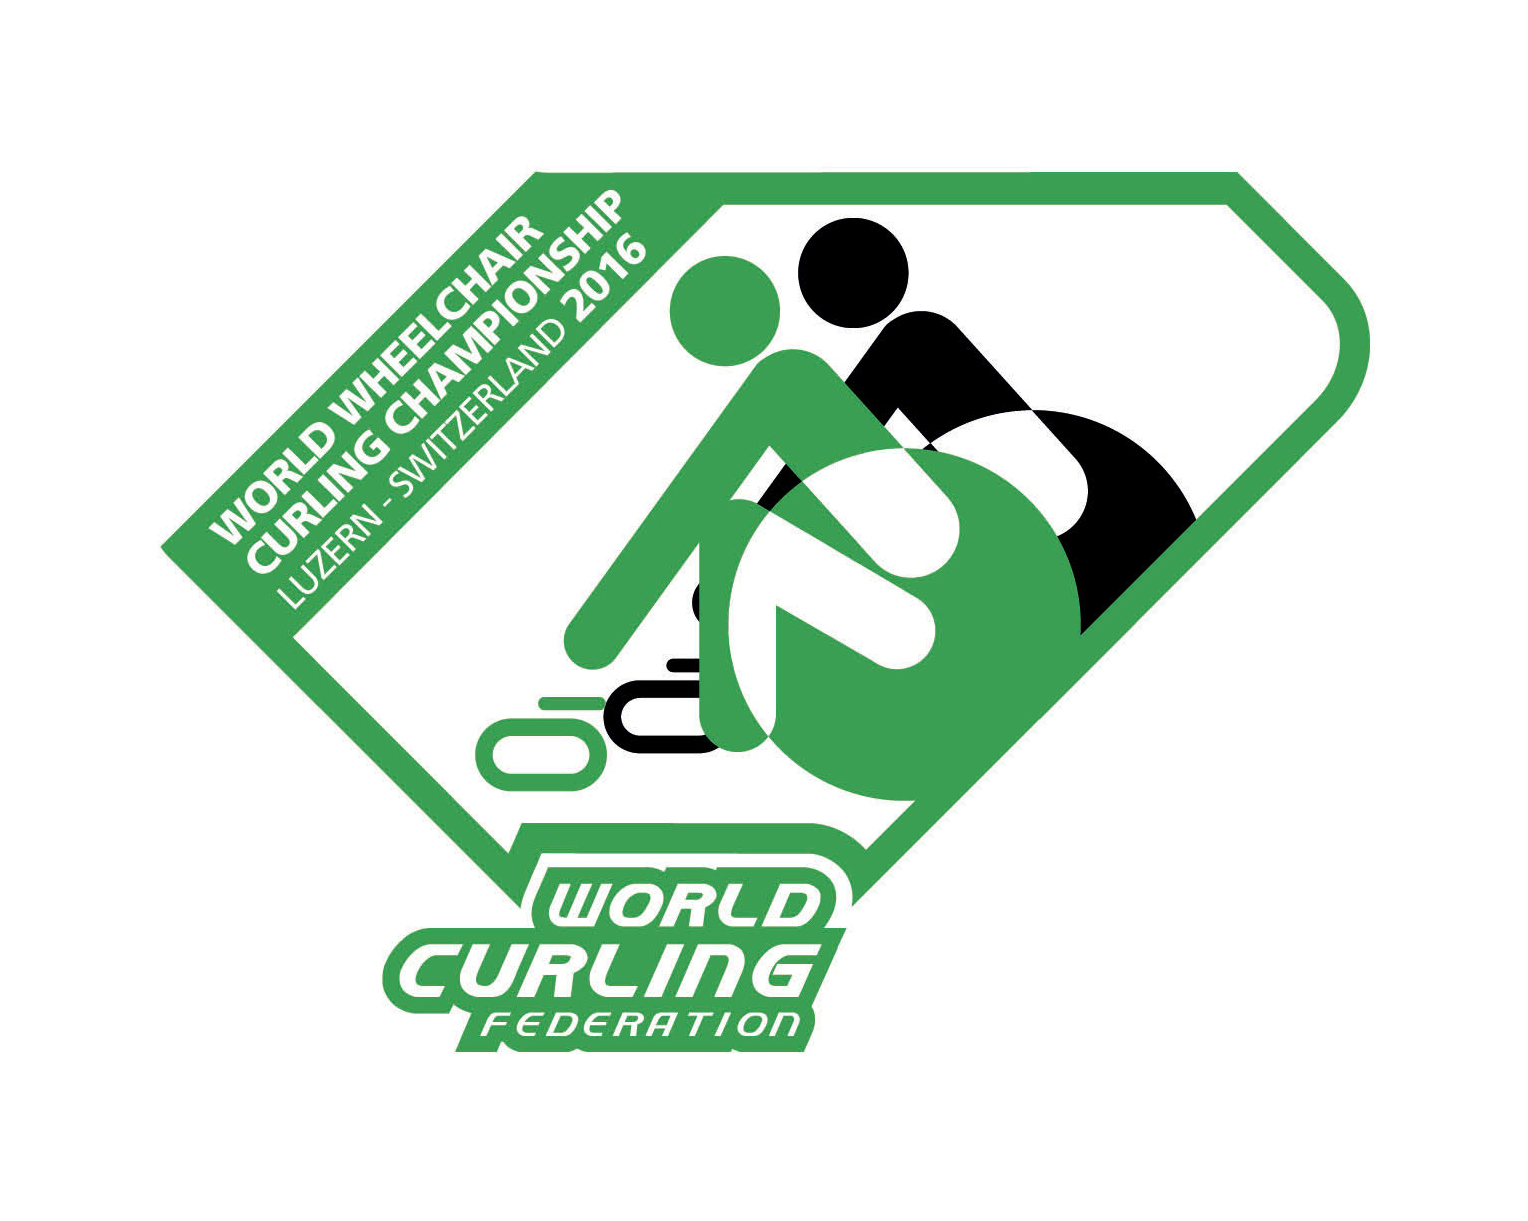 http://www.curlingcalendar.com/files/tournament-pictures/wwhcc2016%20logo%20fb.png